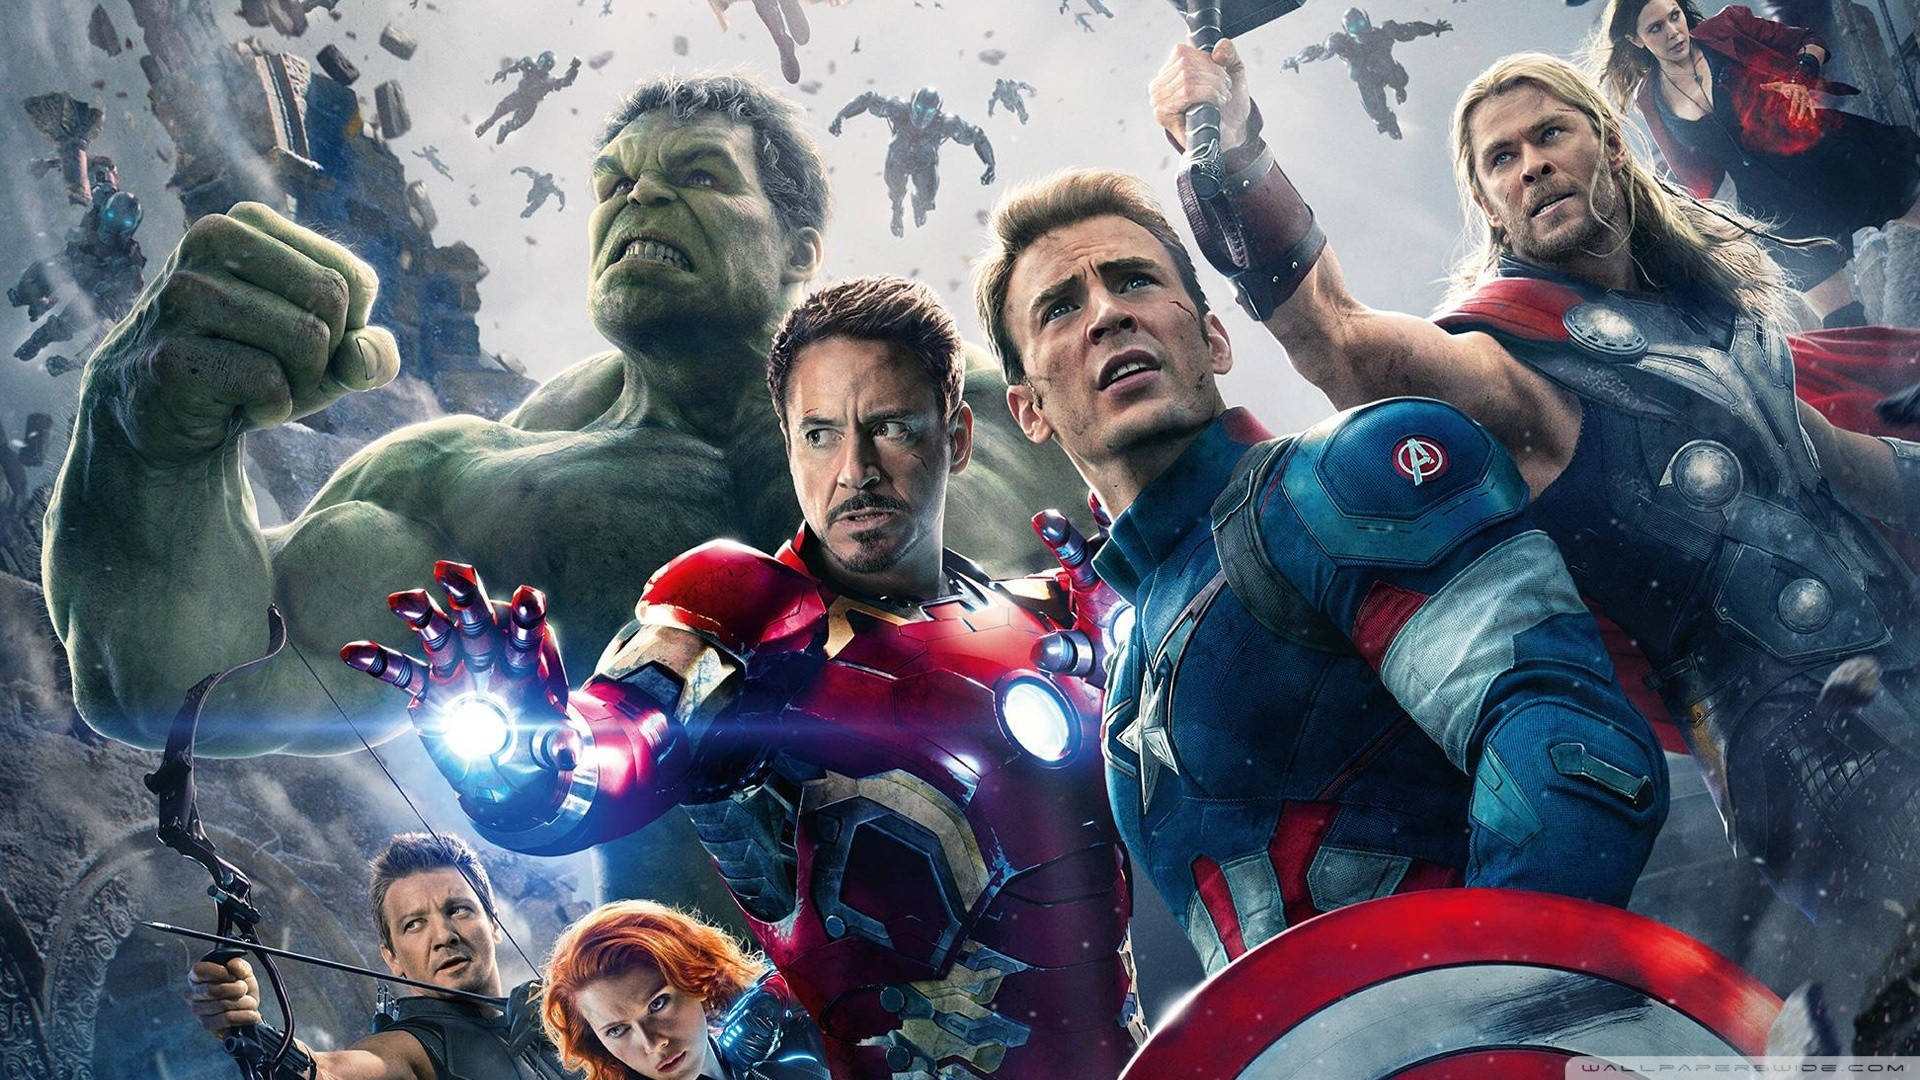 The Avengers united to fight against evil Wallpaper